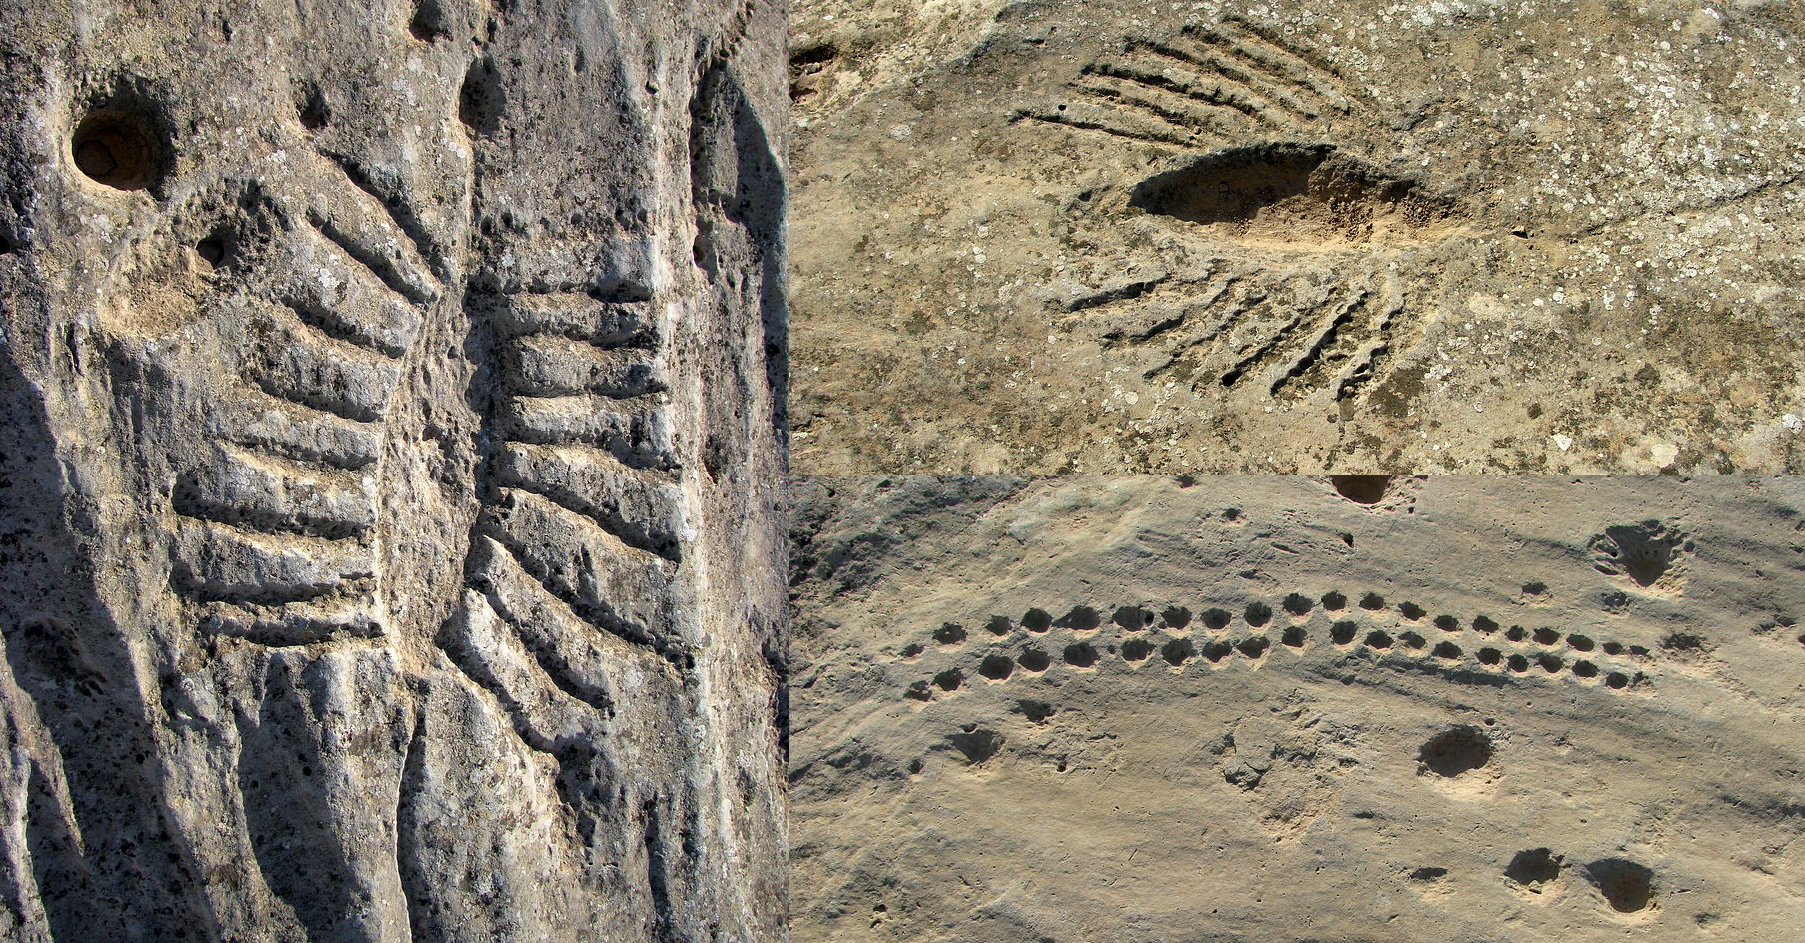 There are around 900 rock carvings at Al Jassasiya. Credit: Wikimedia Commons